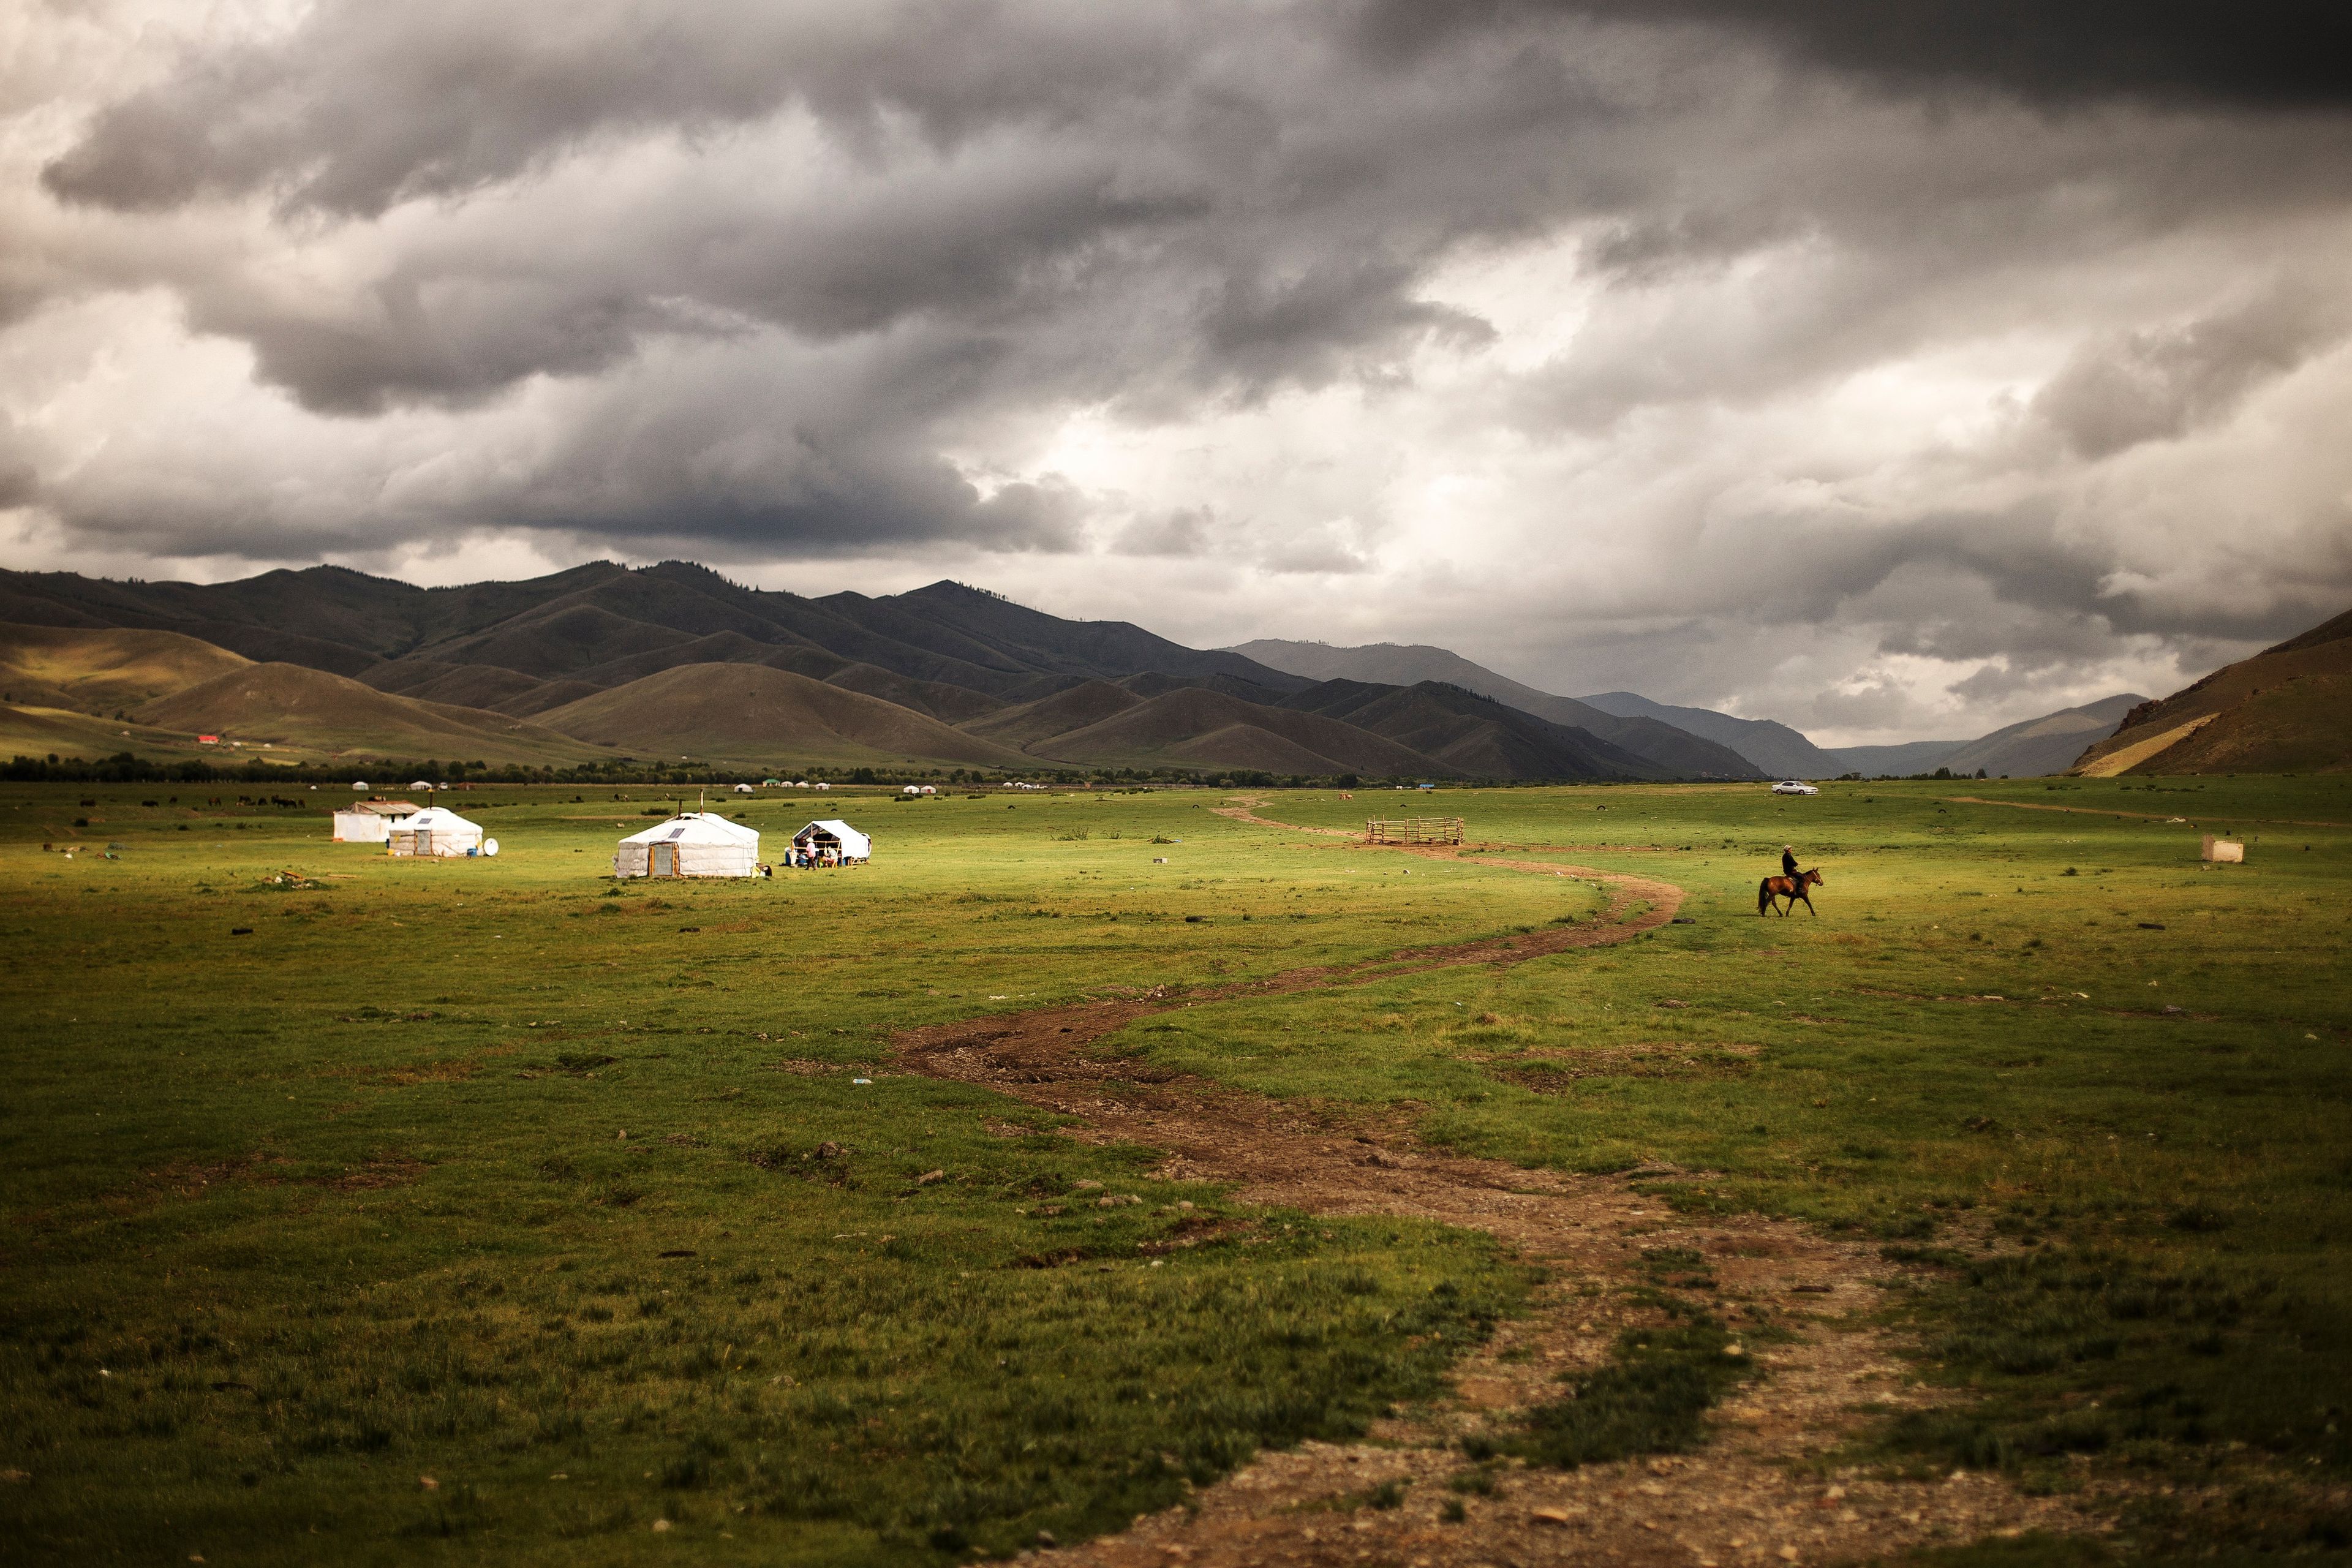 A landscape in Mongolia.